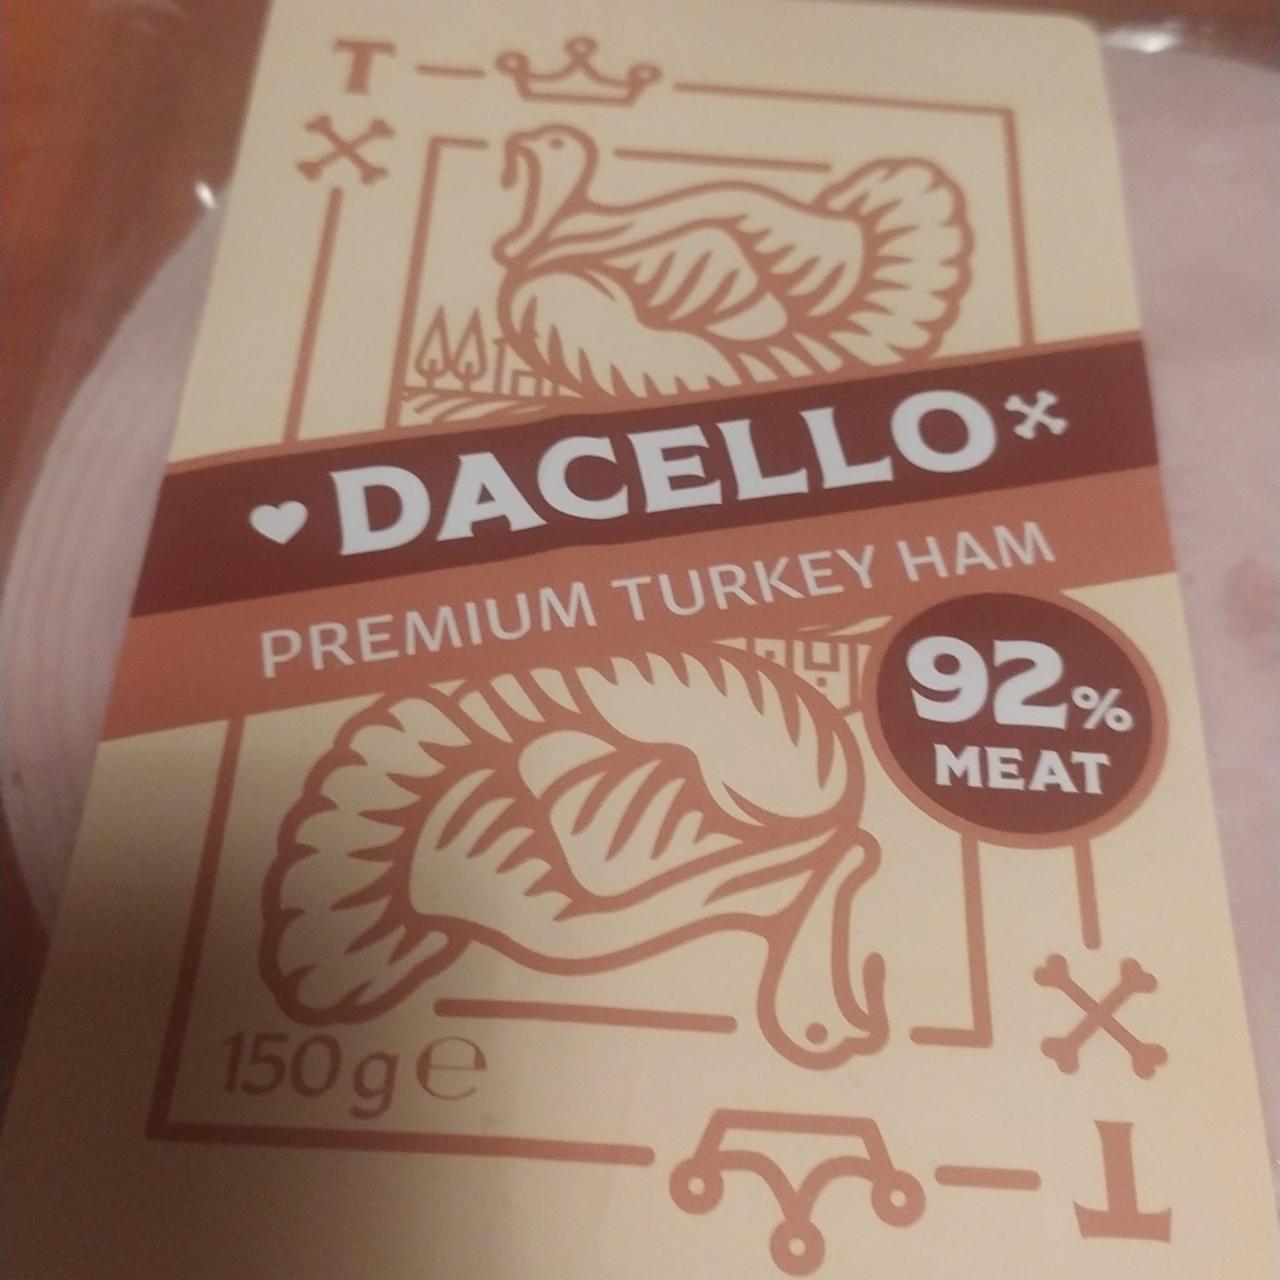 Képek - Premium Turkey Ham Dacello